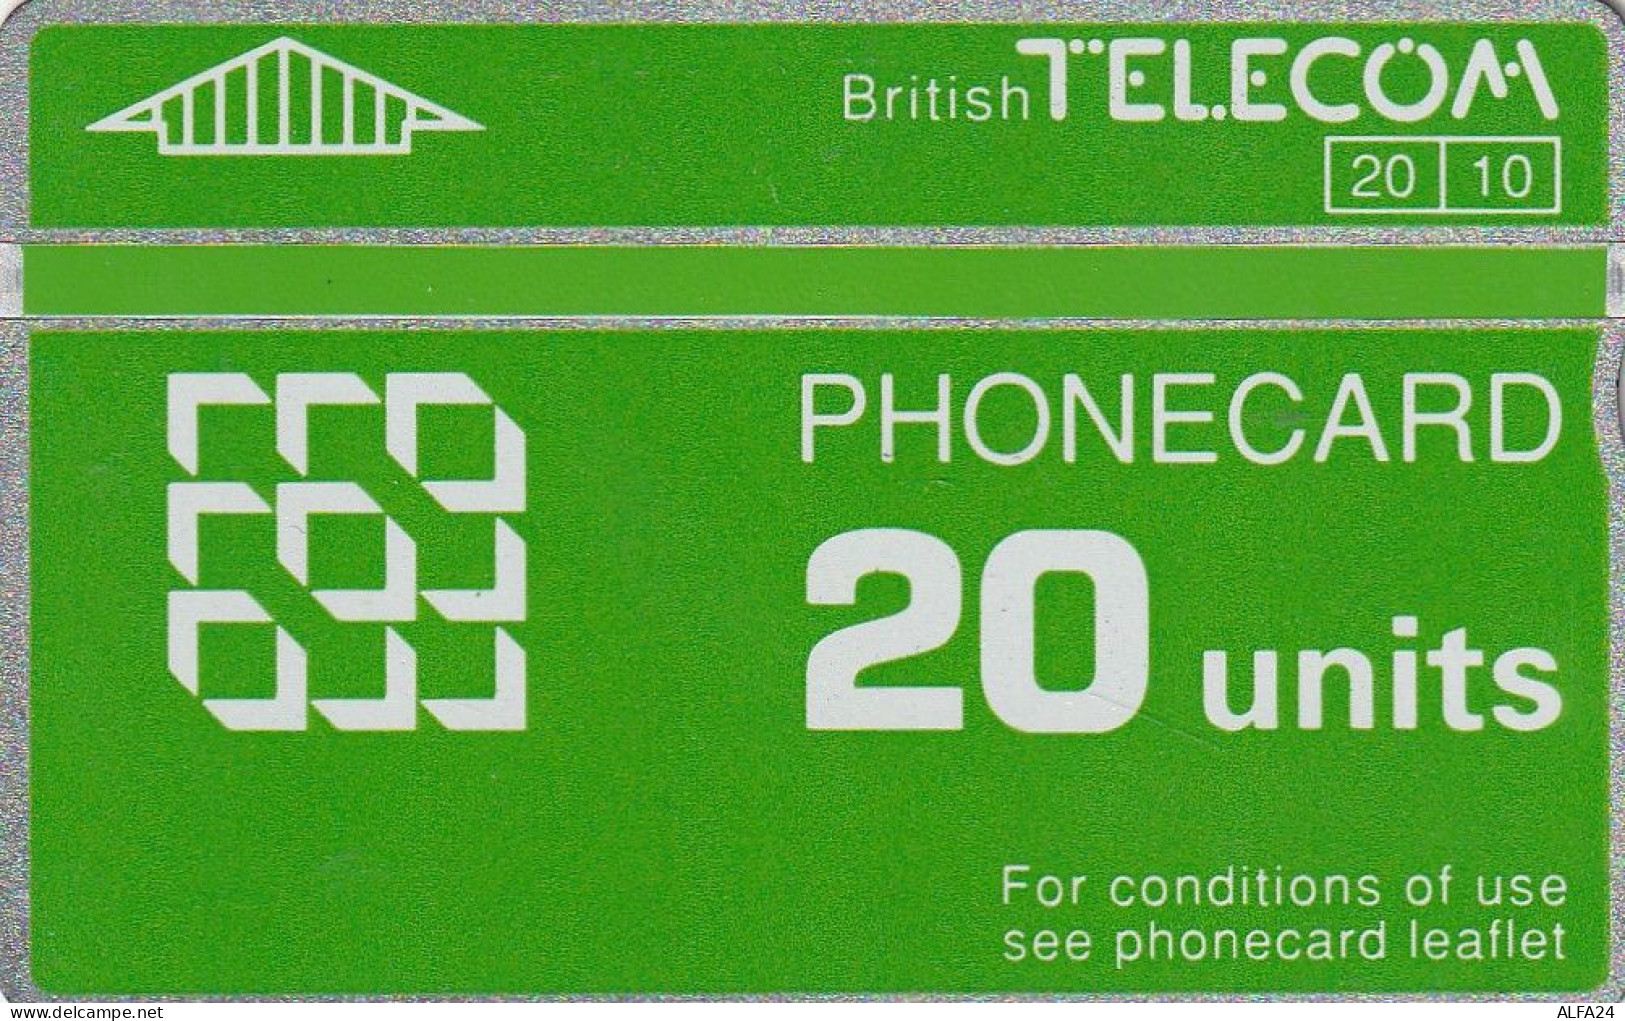 PHONE CARD UK LG (CZ1718 - BT Algemene Uitgaven